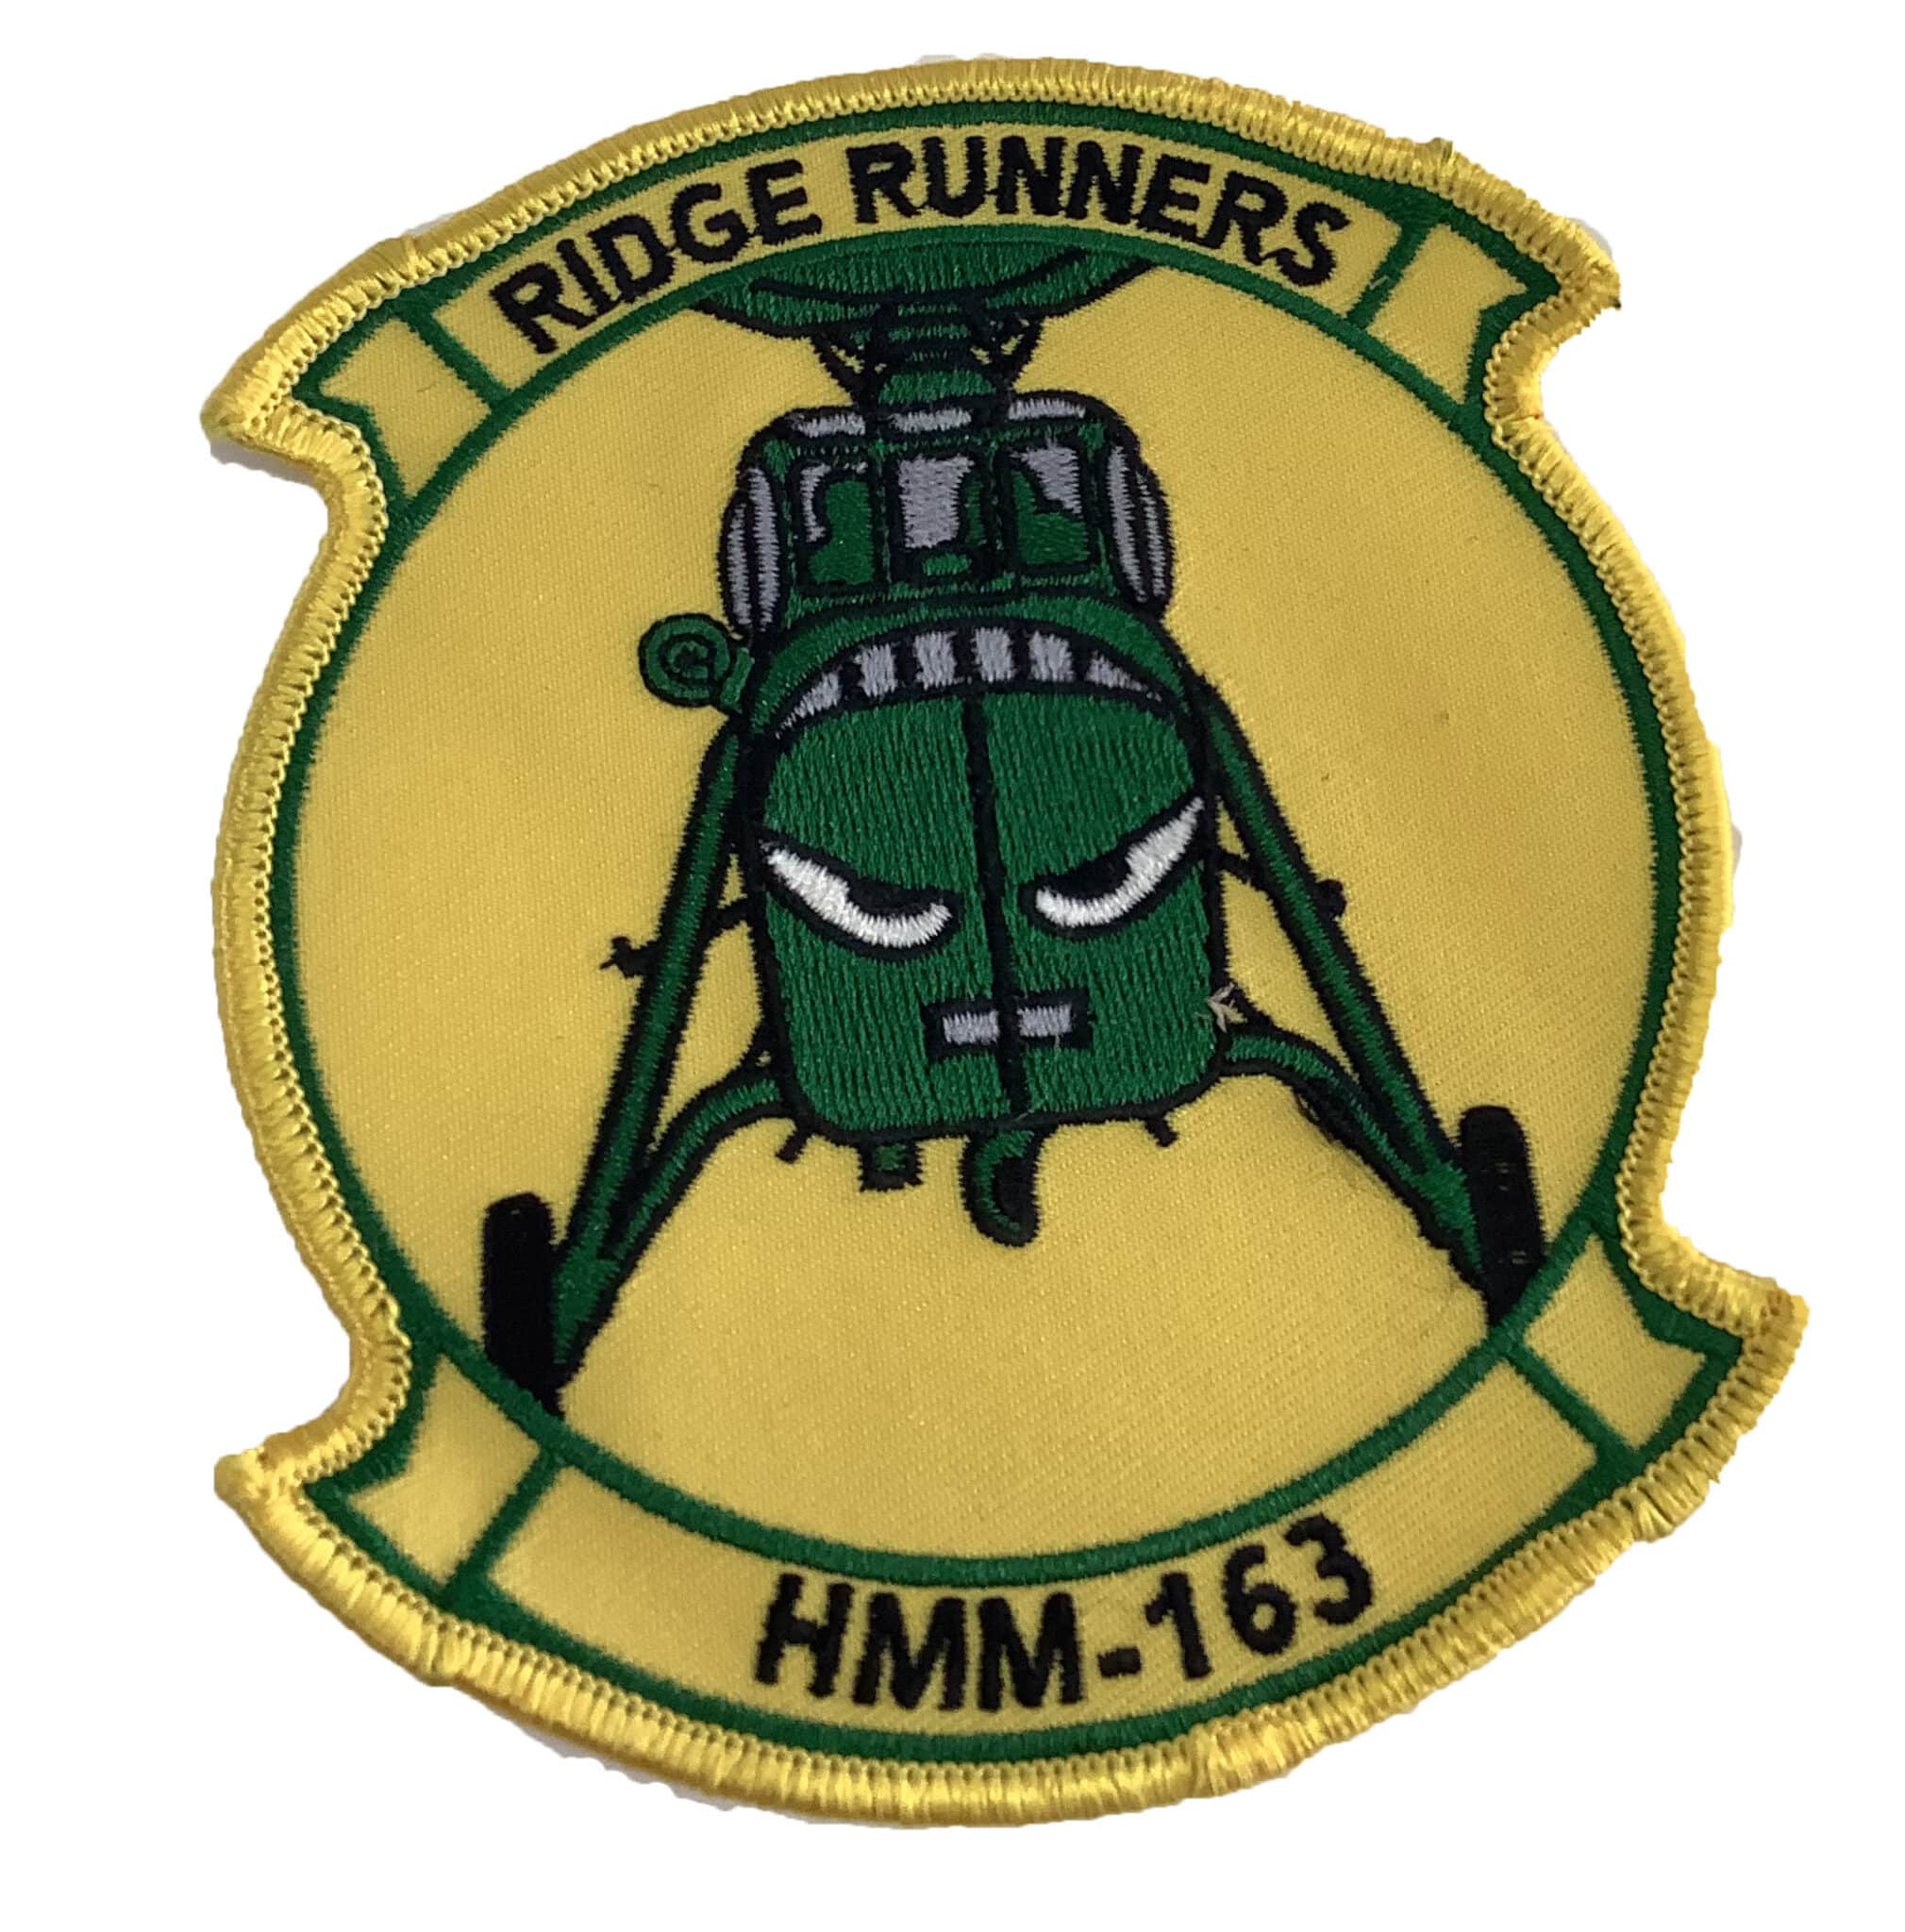 HMM-163 Ridge Runners Squadron Patch – Sew On